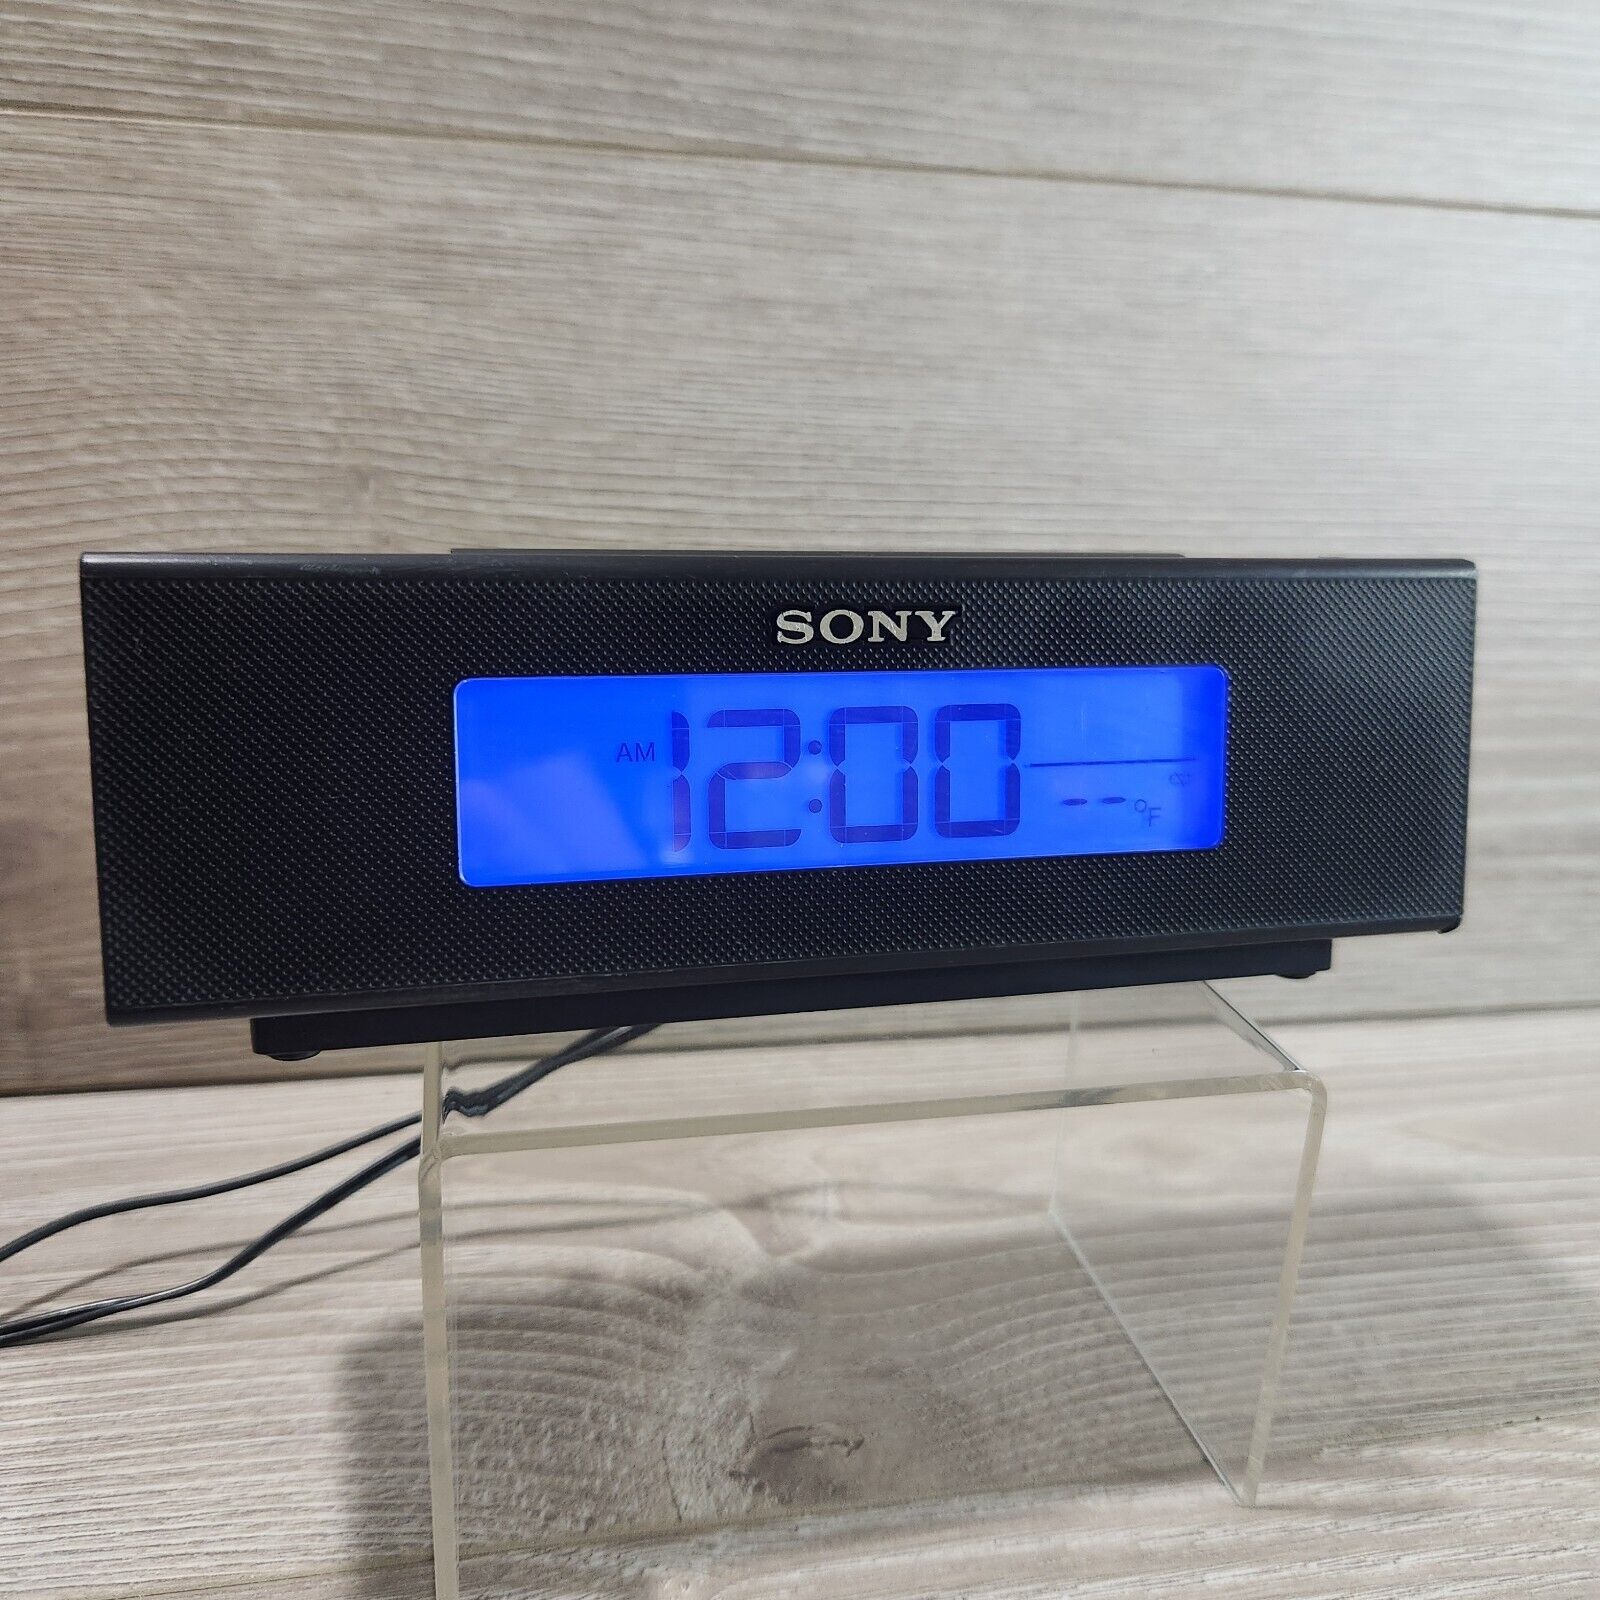 Sony Dream Machine ICF-C707 Alarm Clock-Nature Sounds-Black-AM/FM-Tested Works